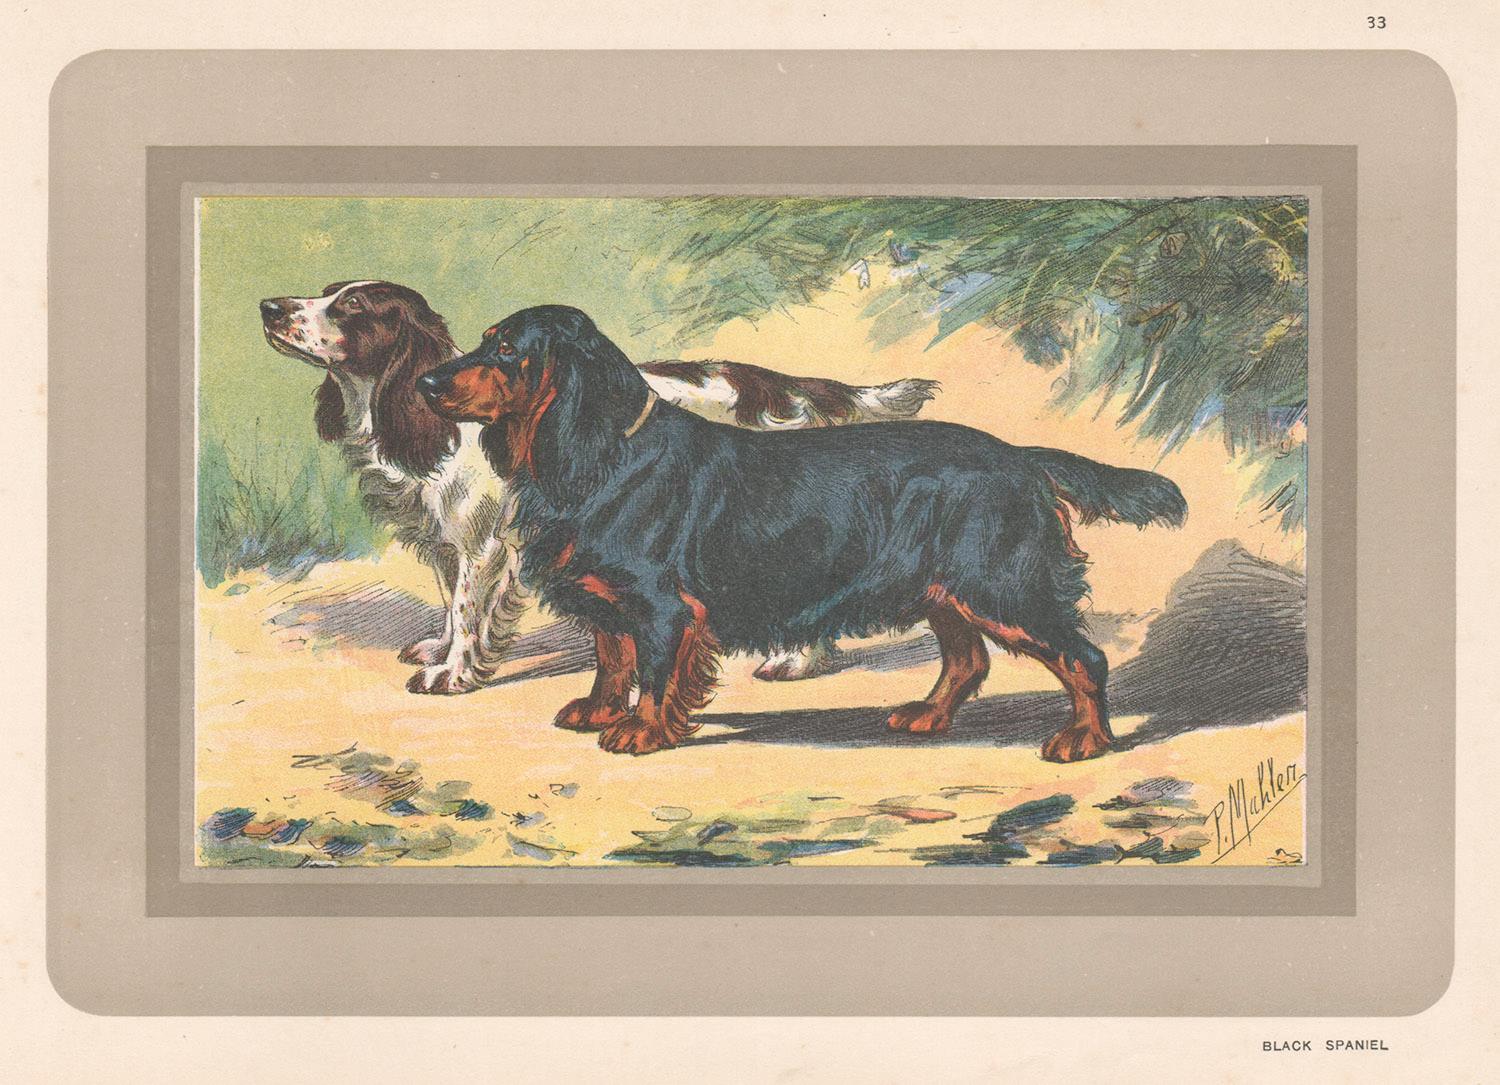 P. Mahler Animal Print - Black Spaniel , French hound, dog chromolithograph, 1930s